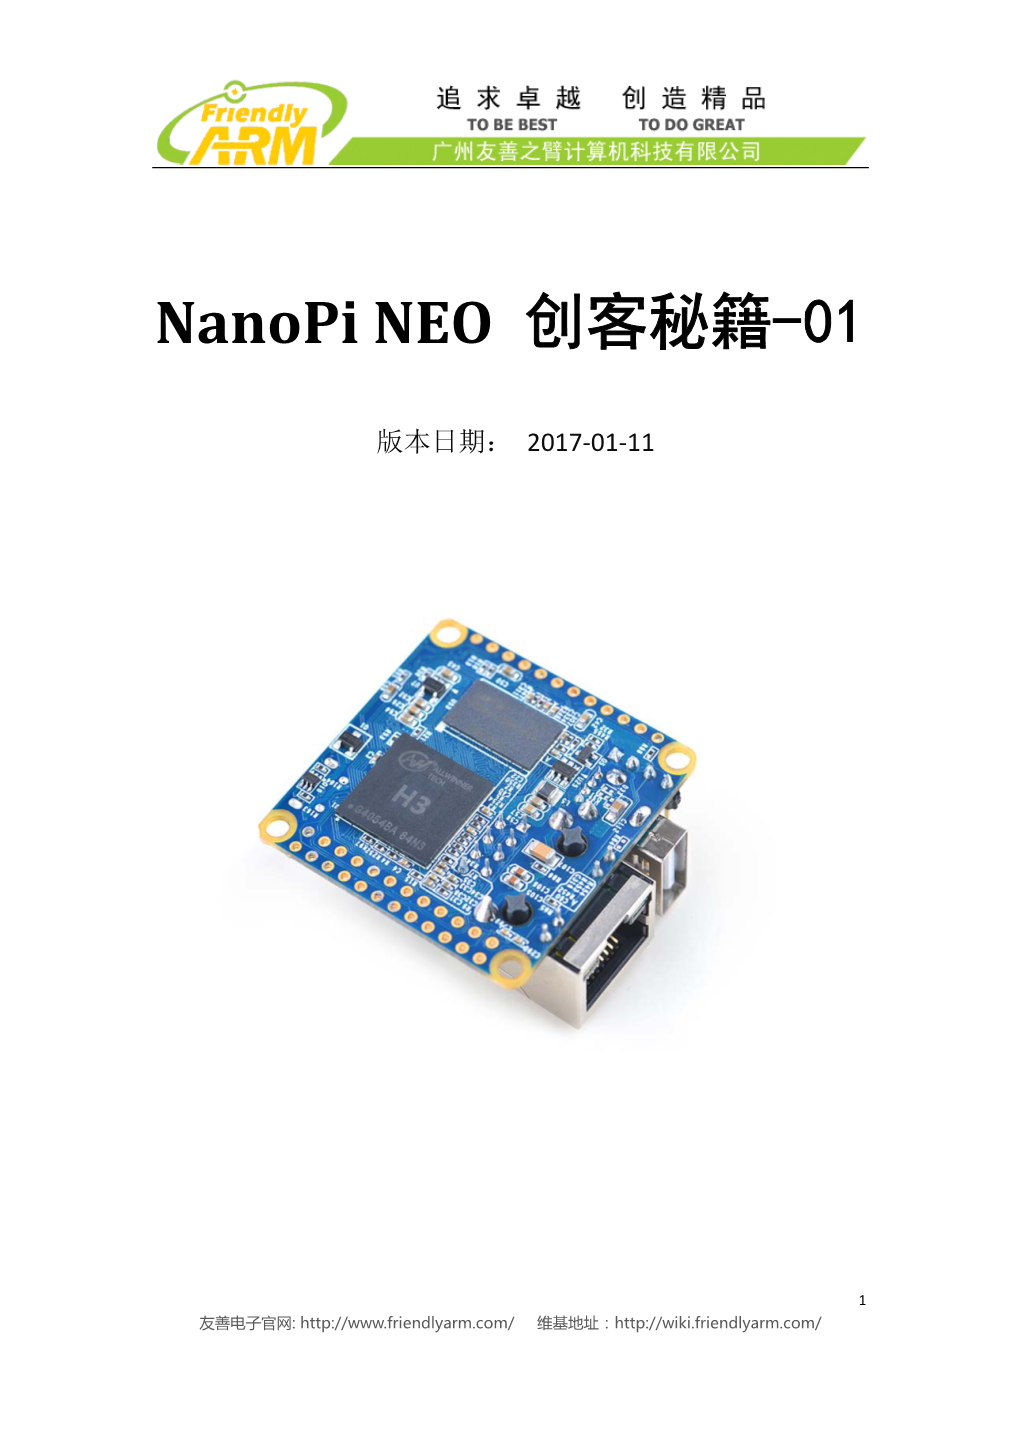 Nanopi NEO 创客秘籍-01